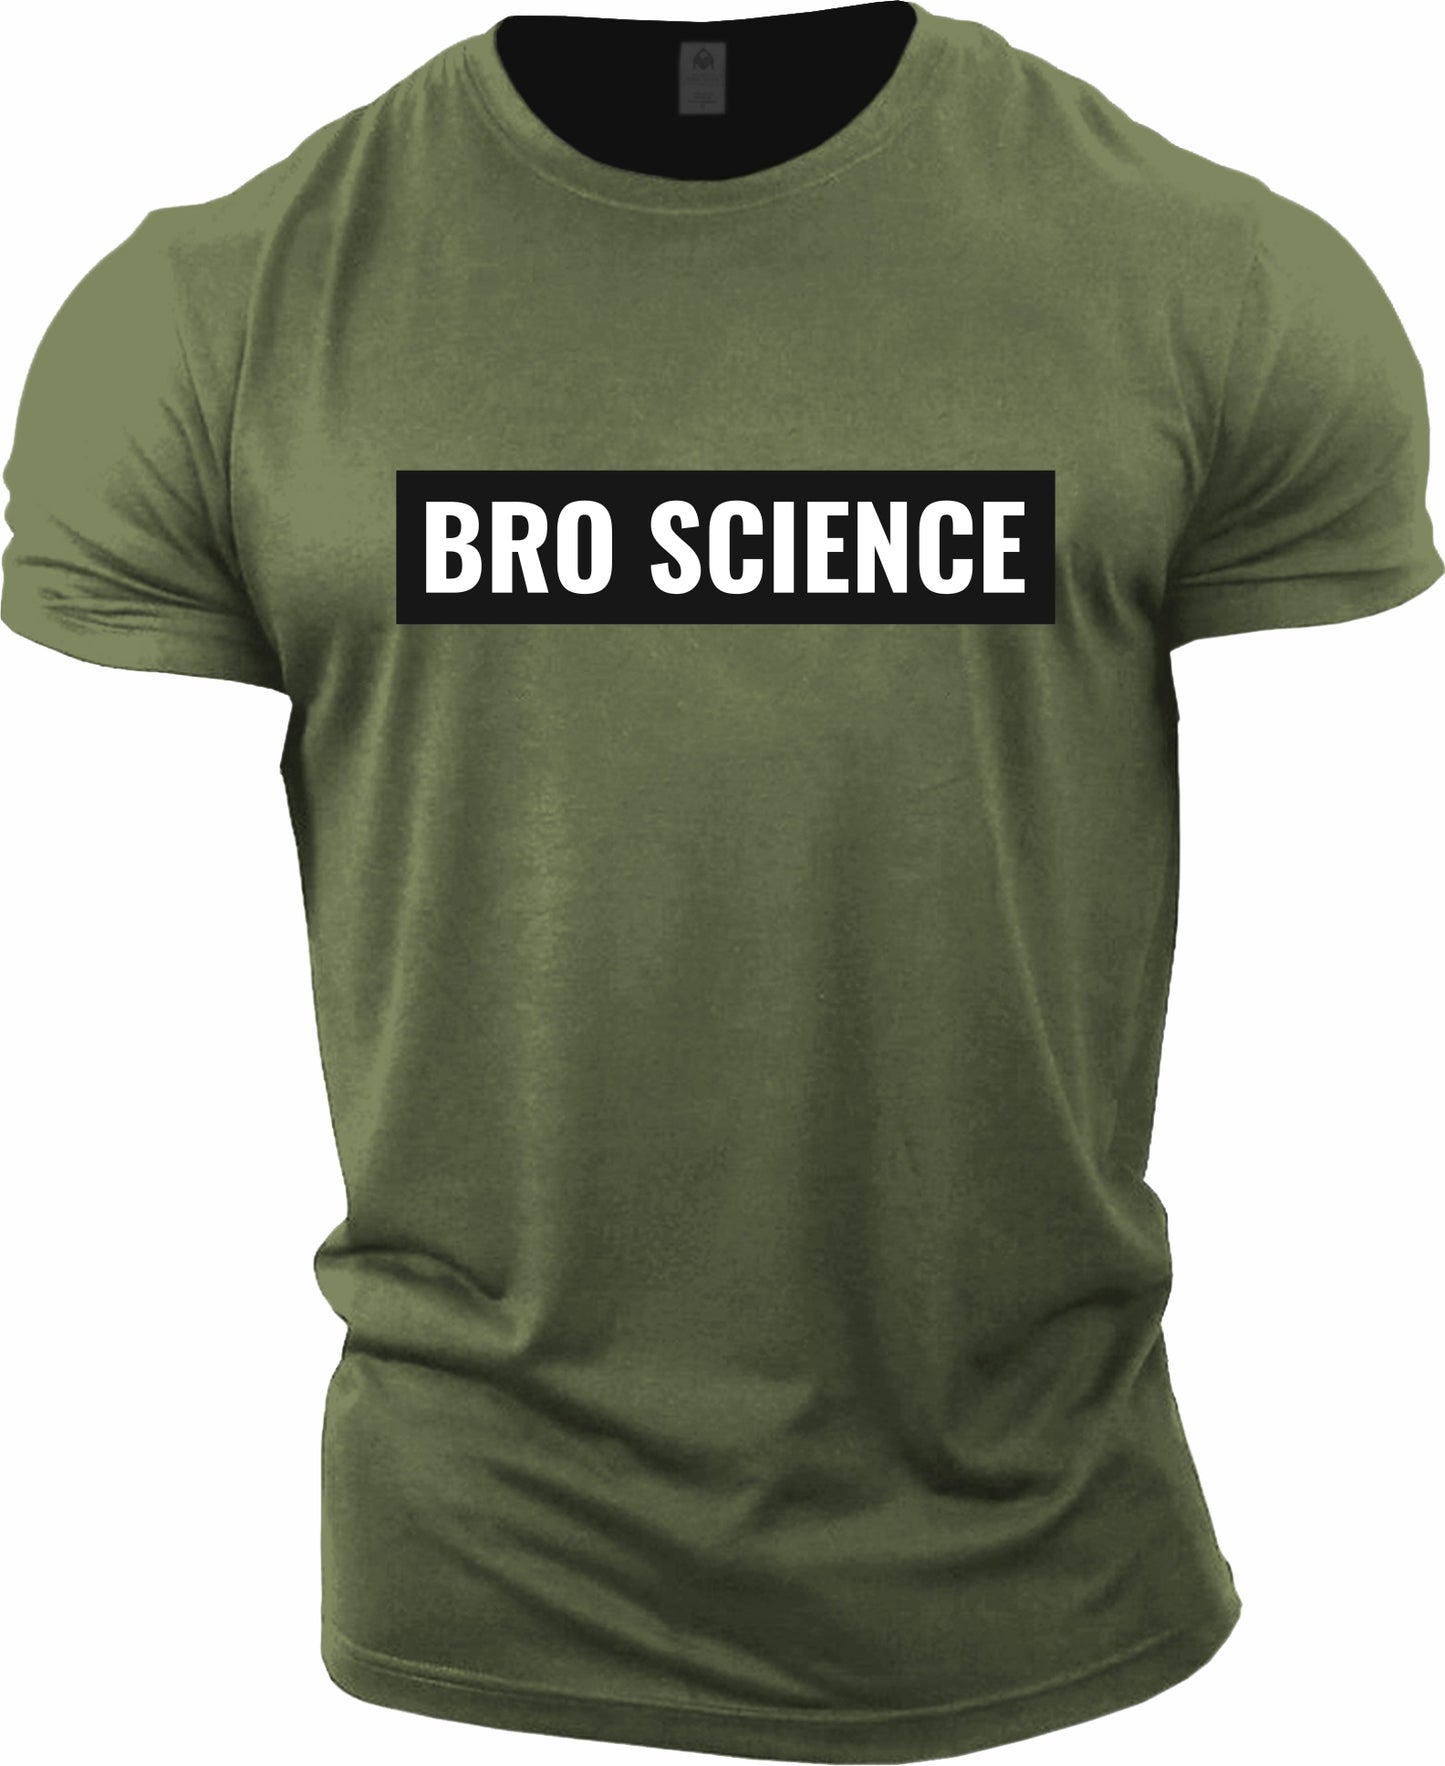 BRO SCIENCE T-shirt